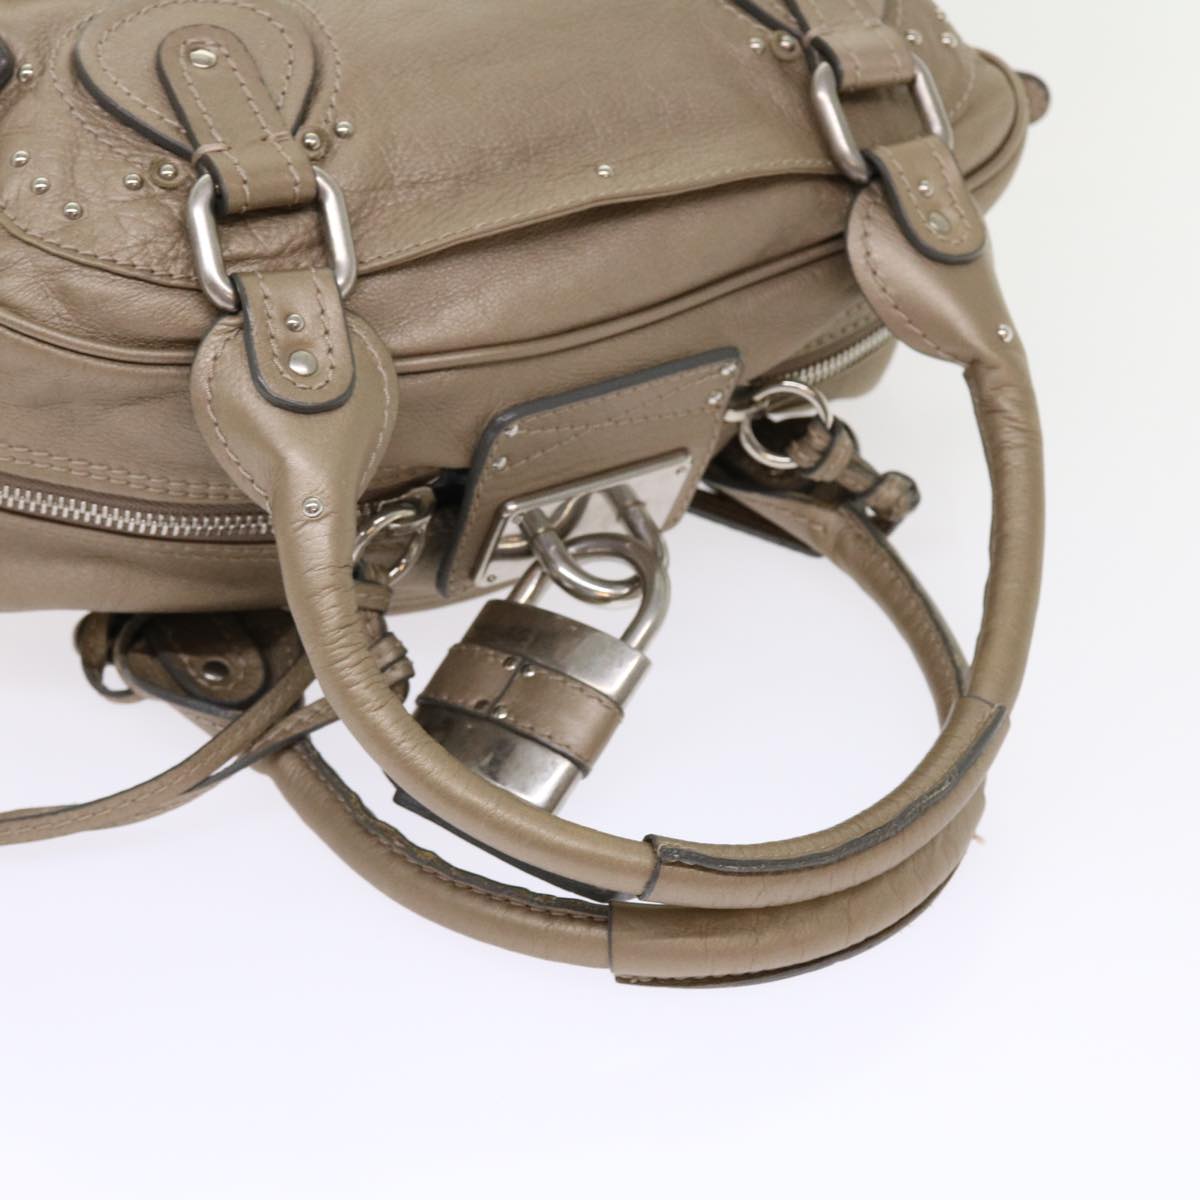 Chloe Paddington Hand Bag Leather Beige Auth 45609